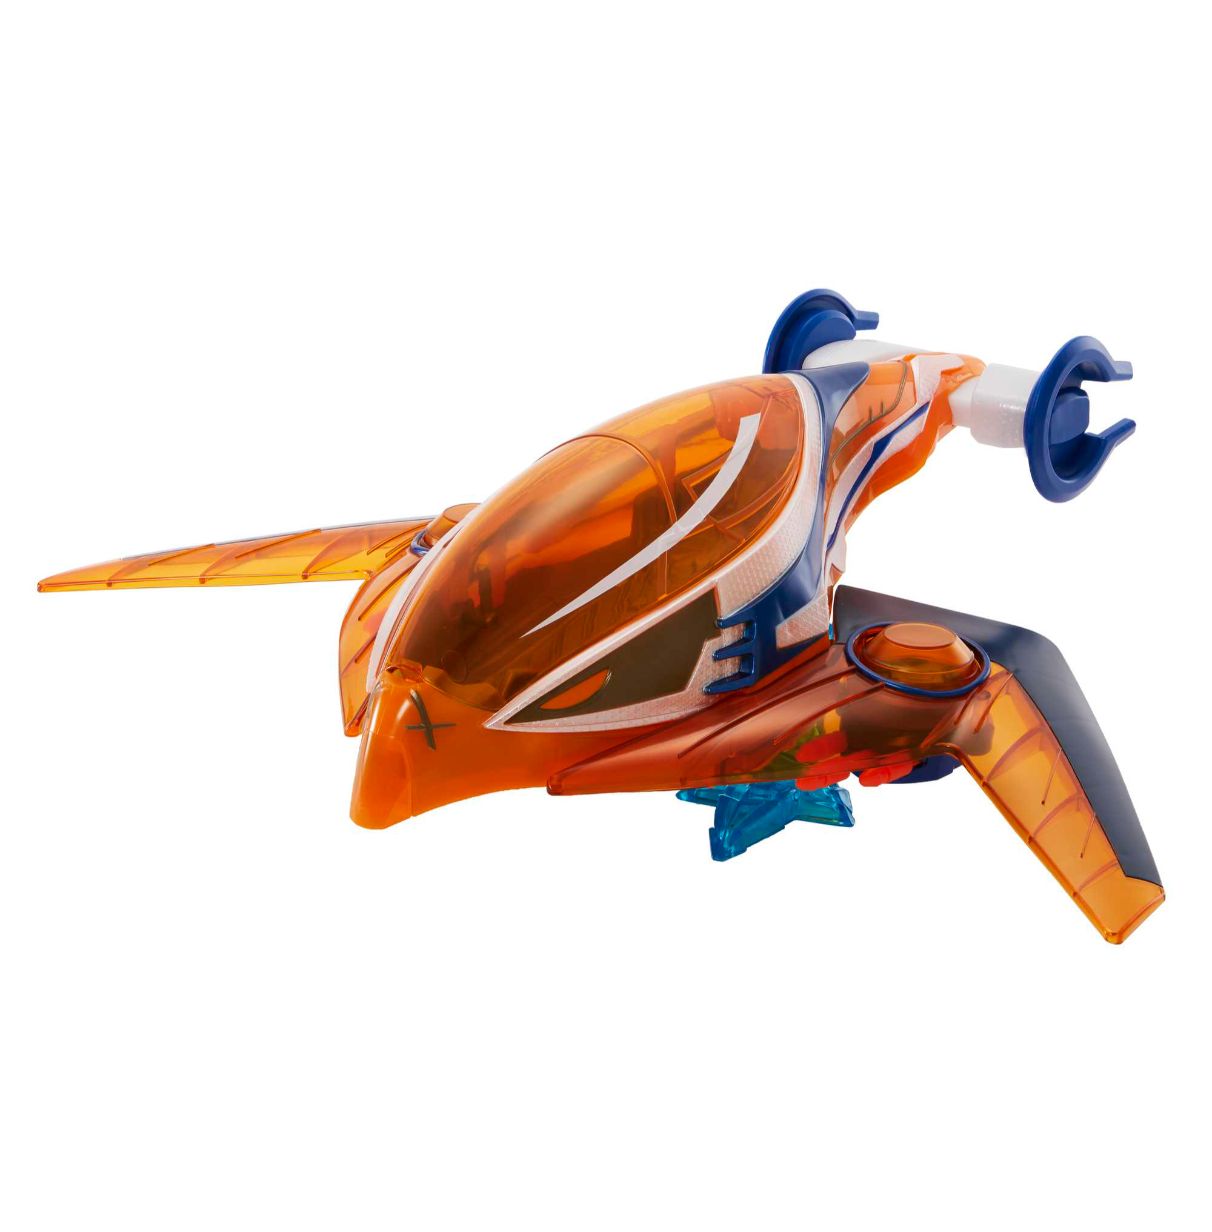 he-man and the masters of the universe garra voladora figura de acción con nave espacial que lanza proyectiles, juguete +4 años 